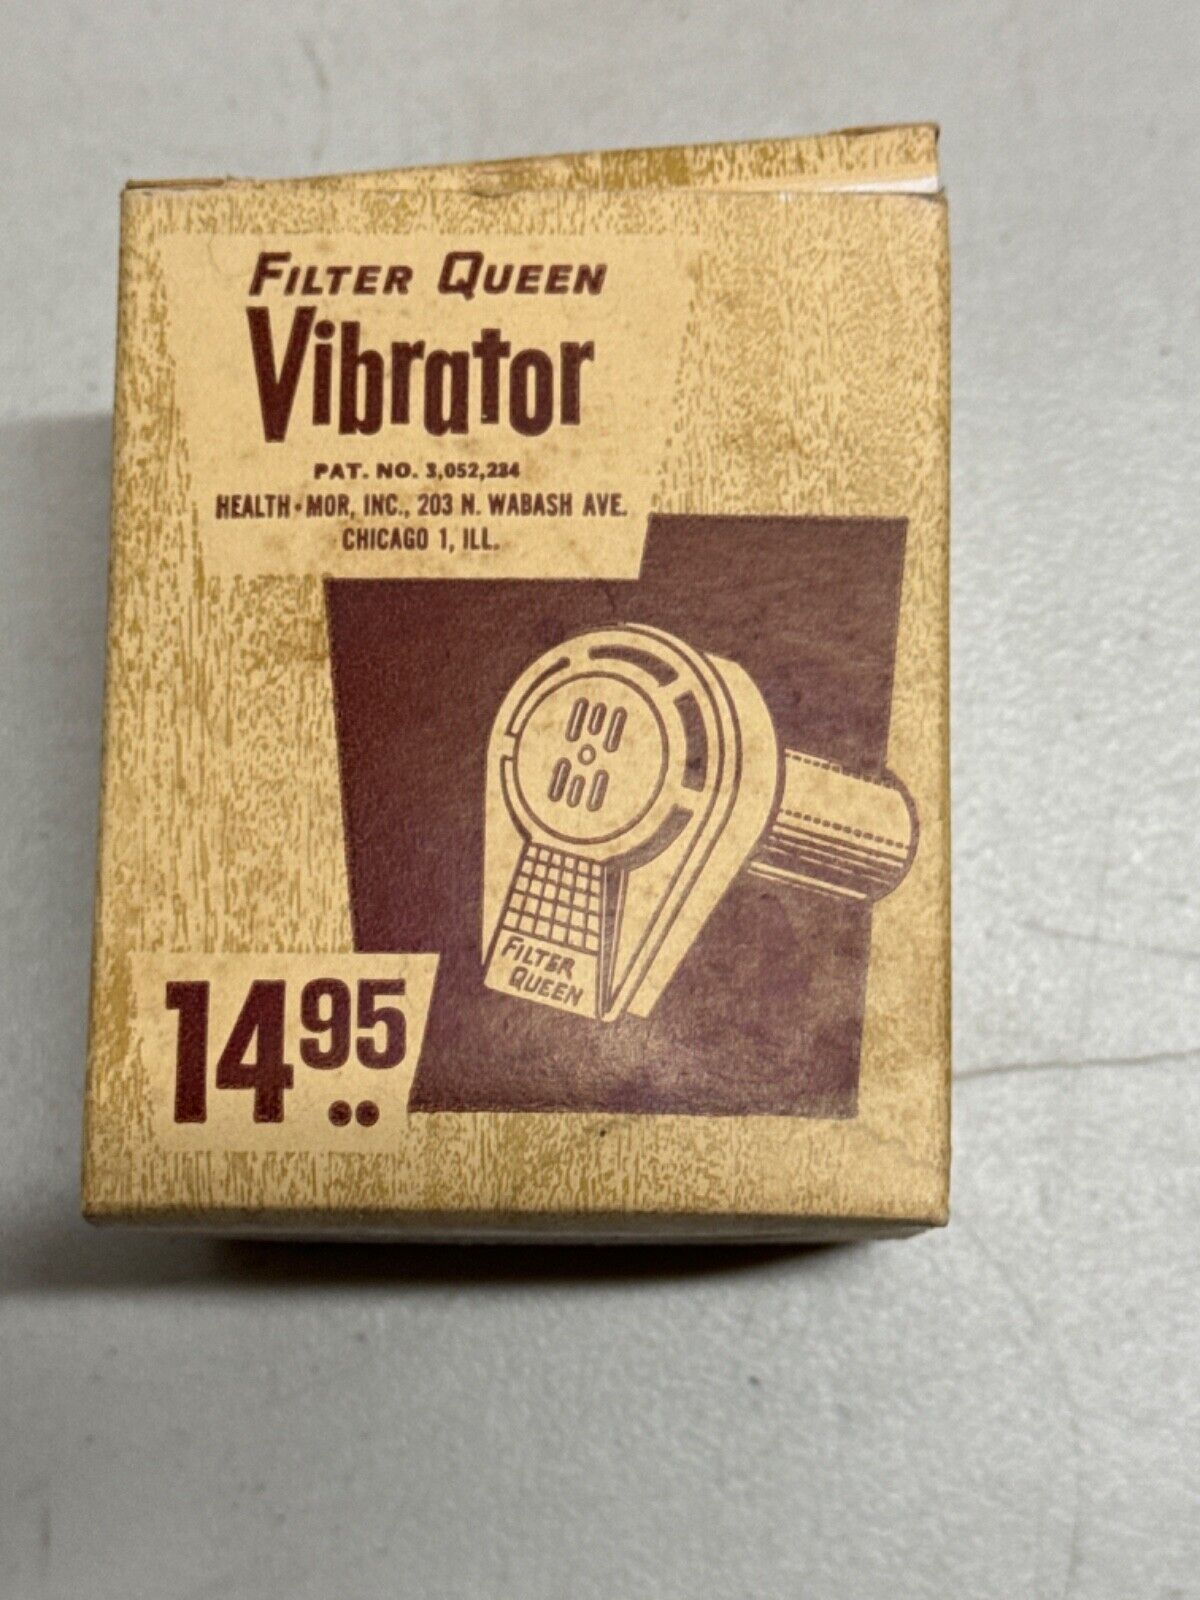 Filter Queen Vibrator